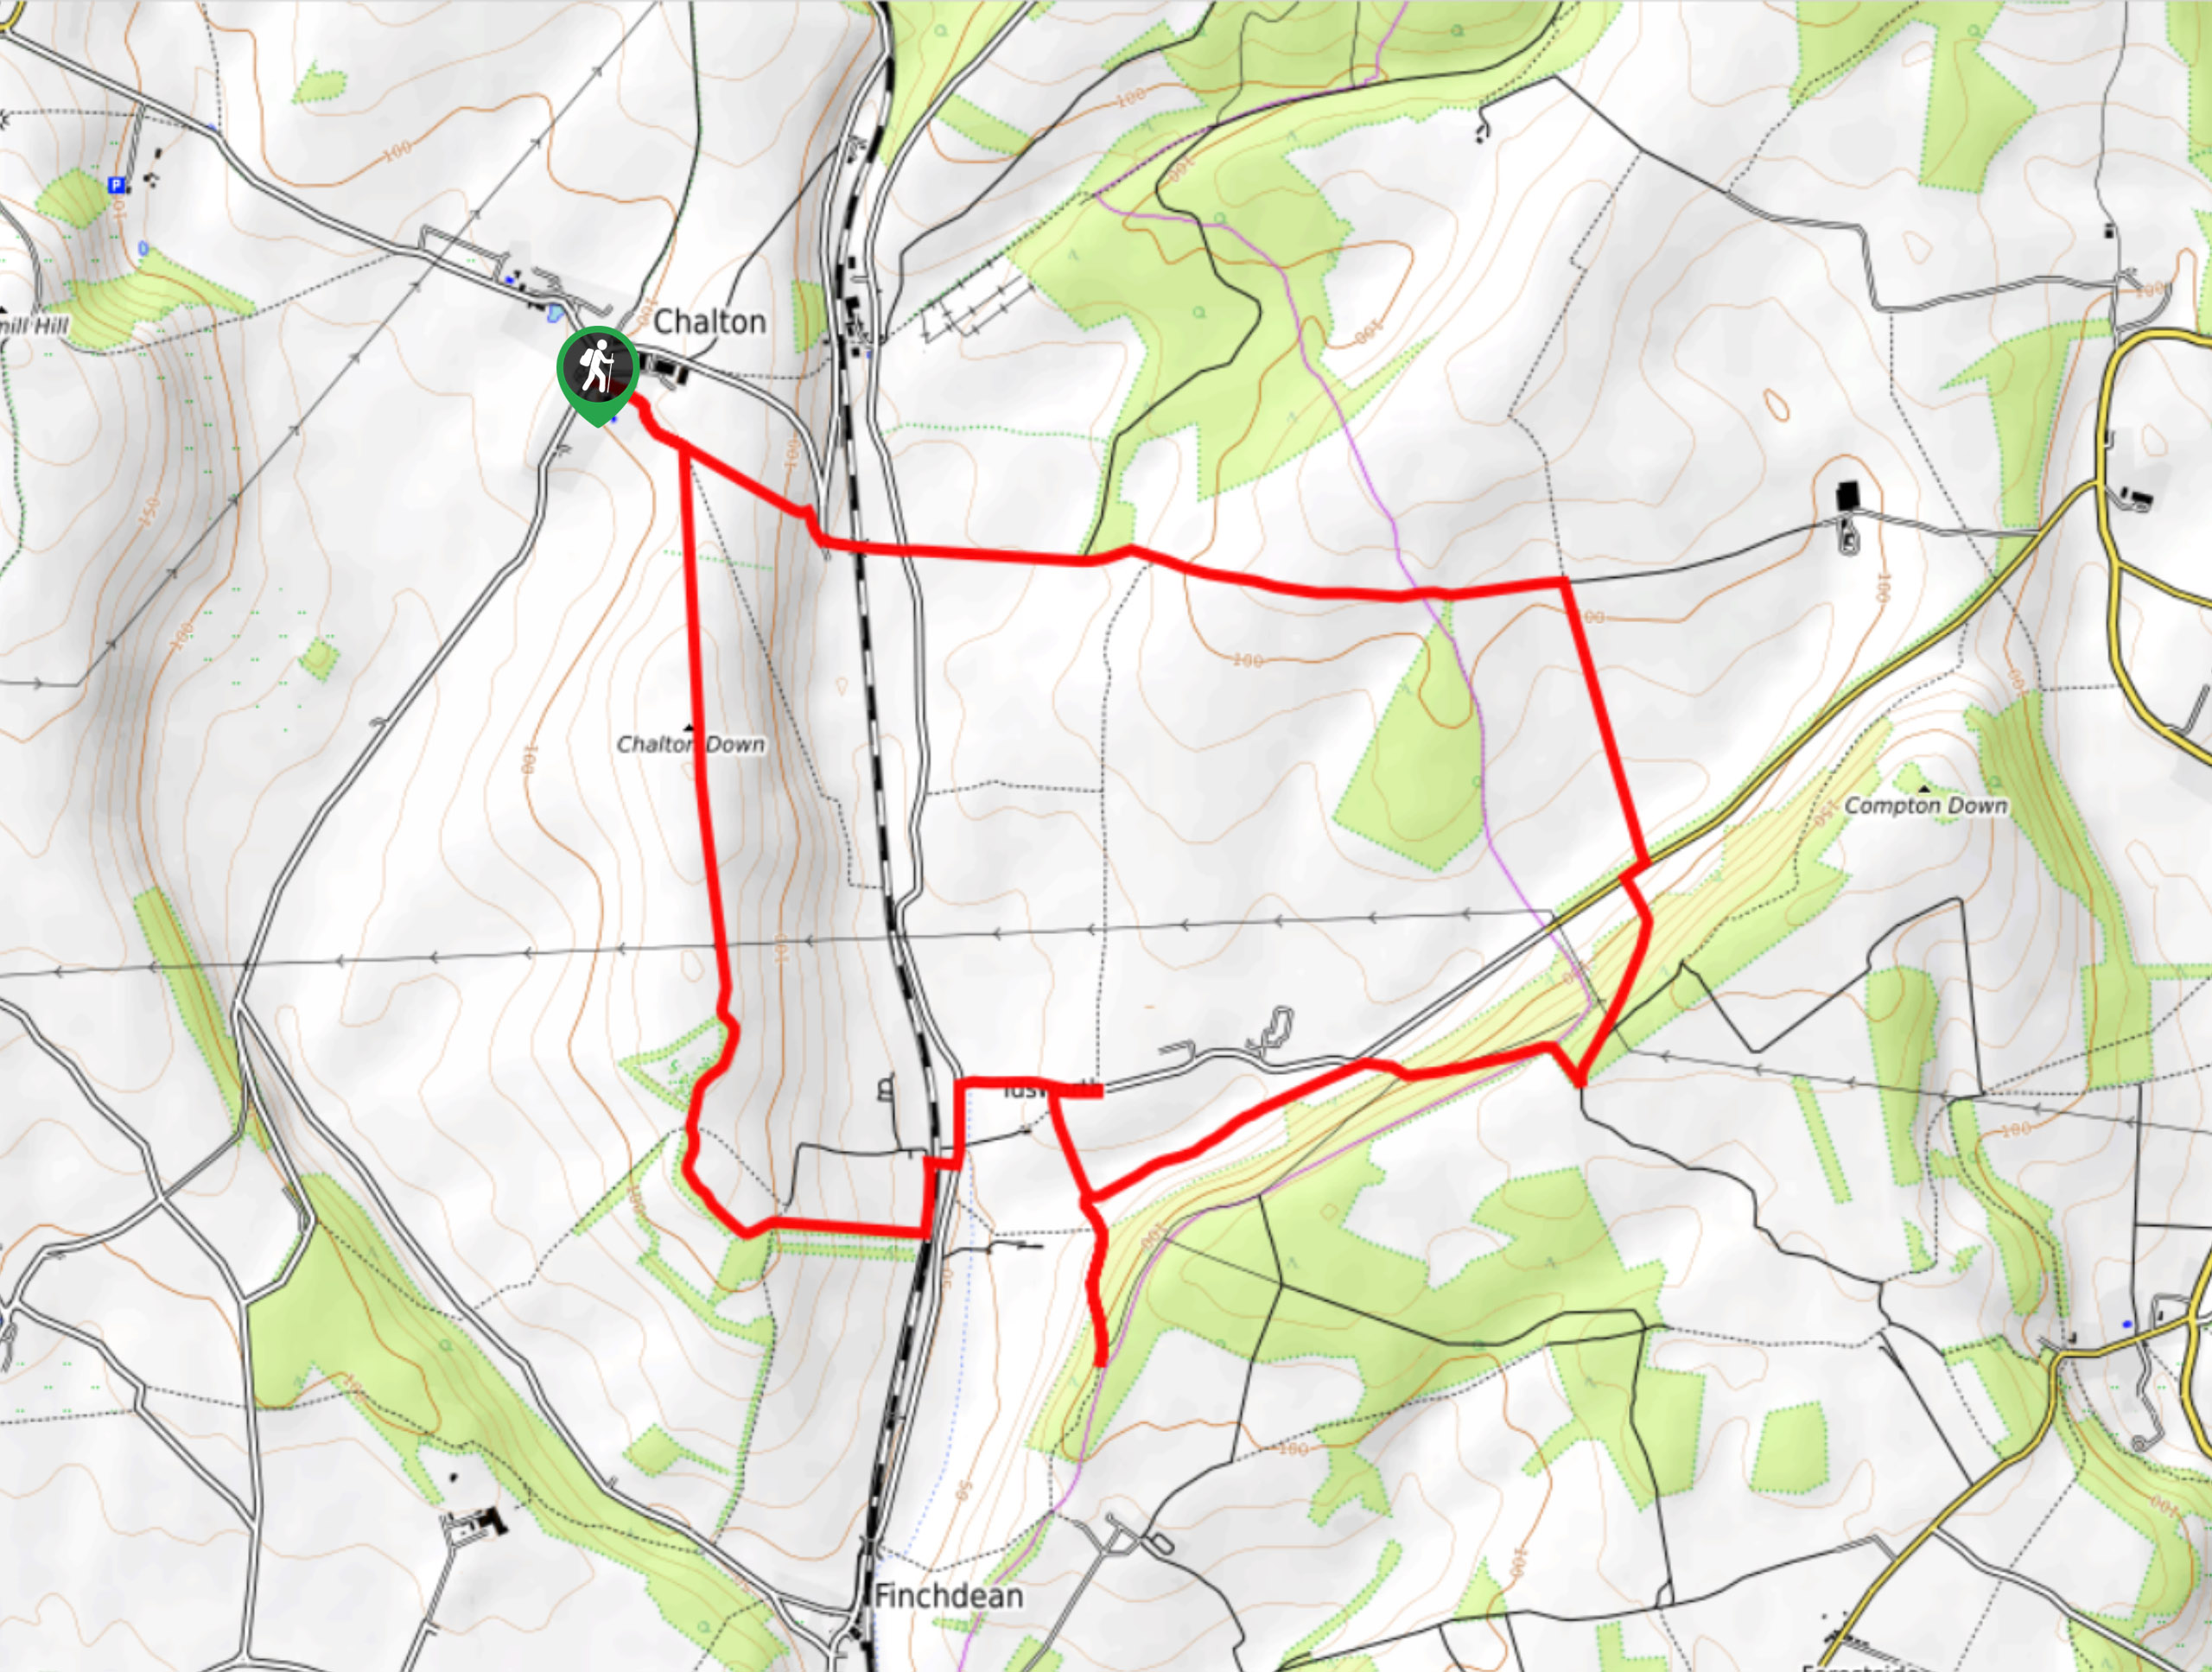 Chalton Down Circular Walk Map